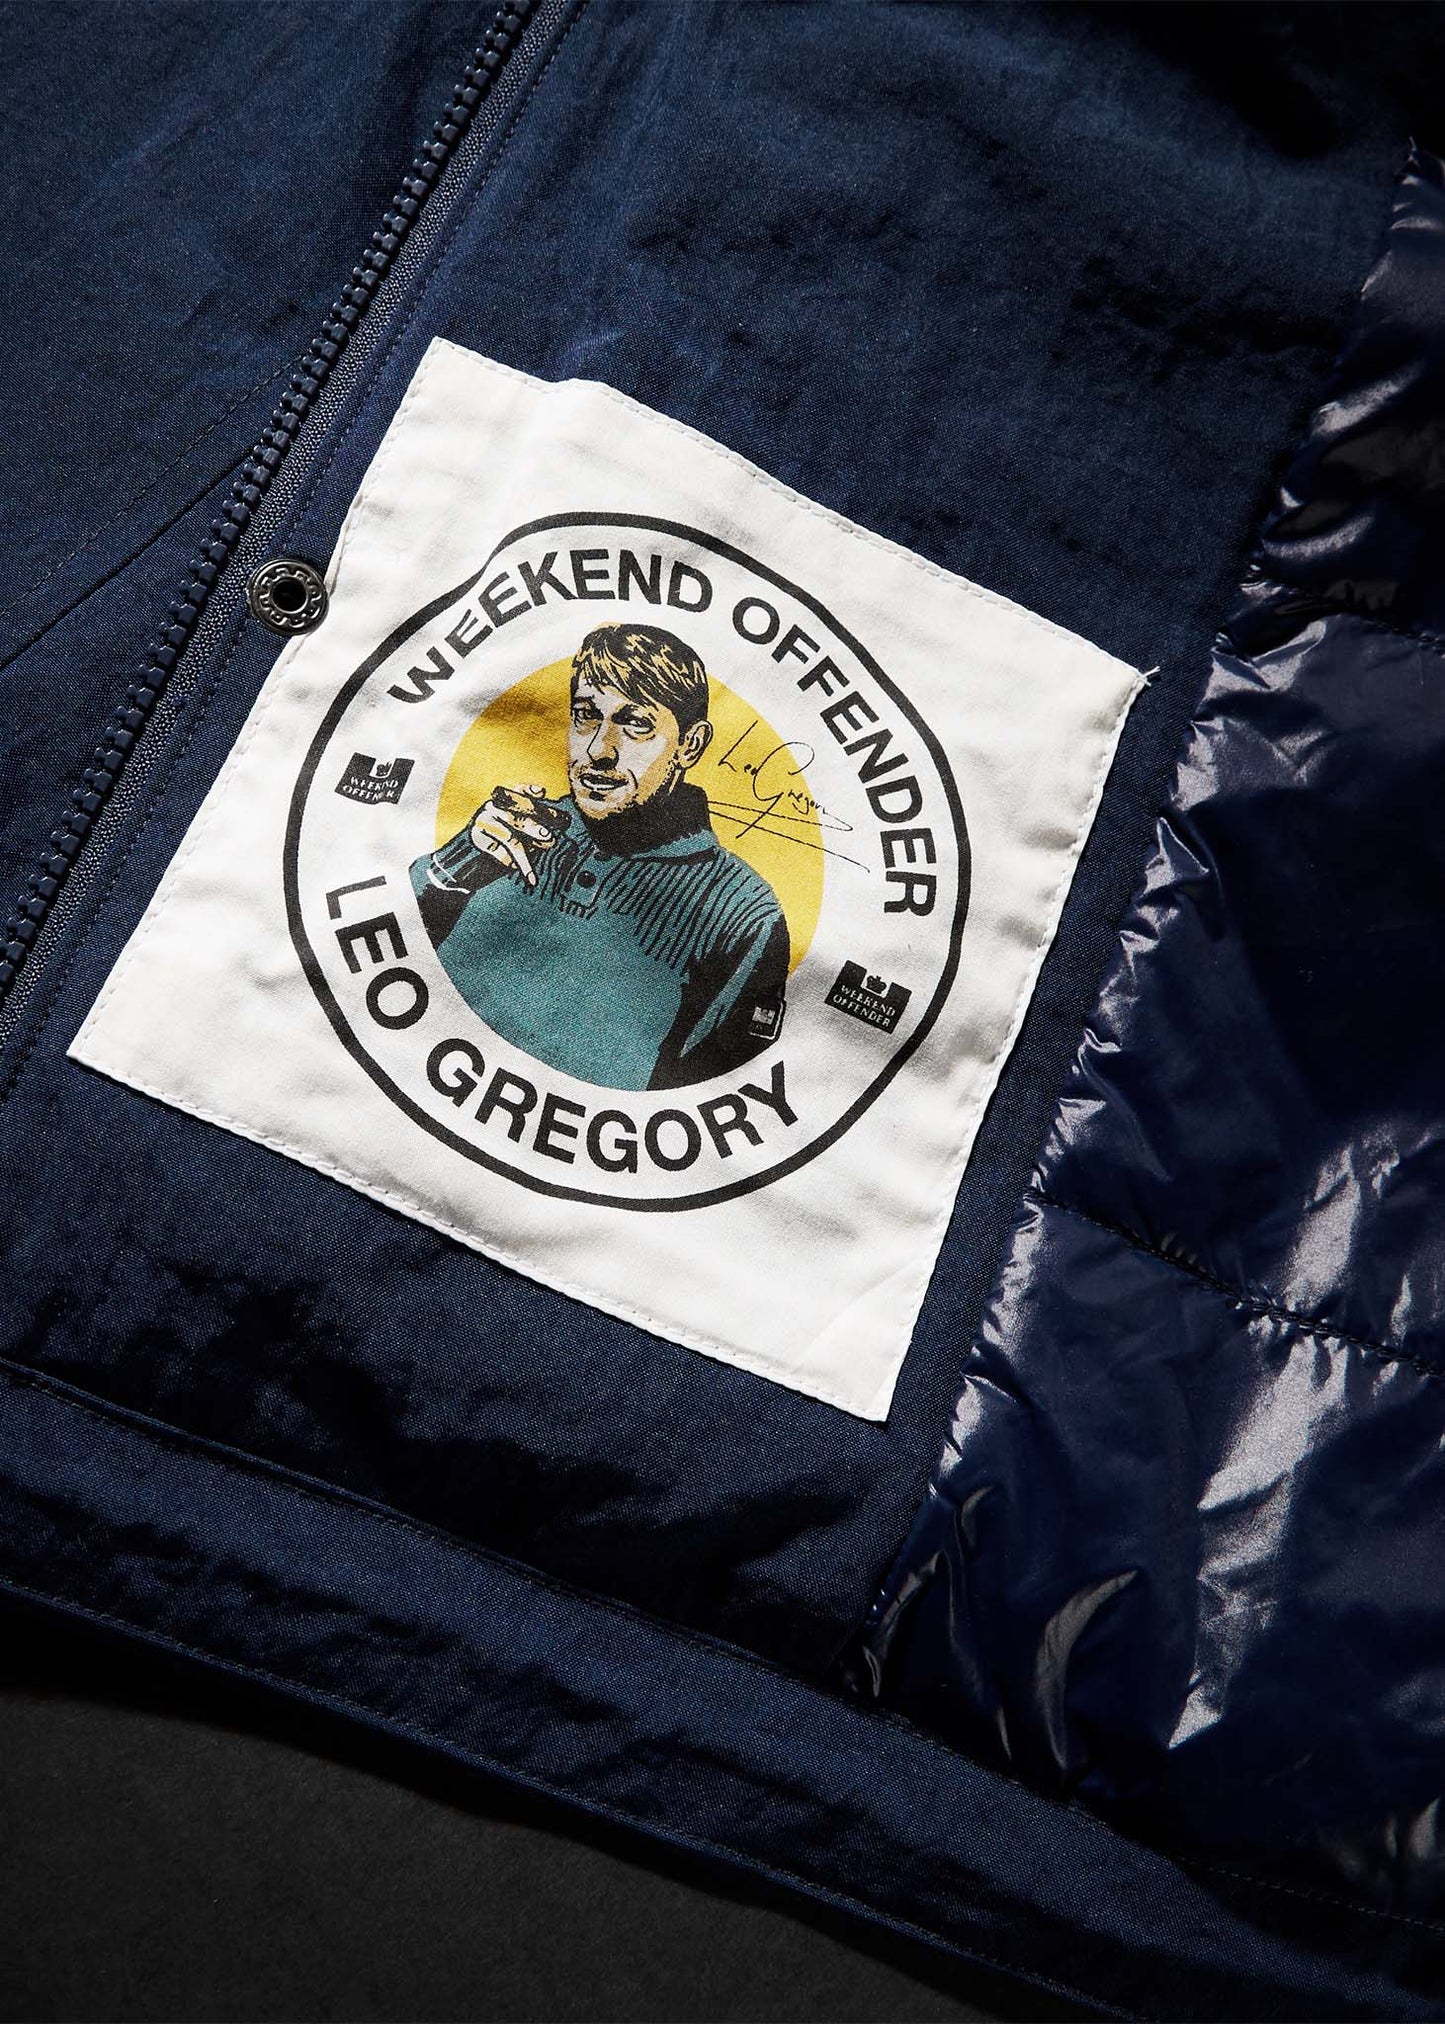 Leo Gregory special jacket - navy